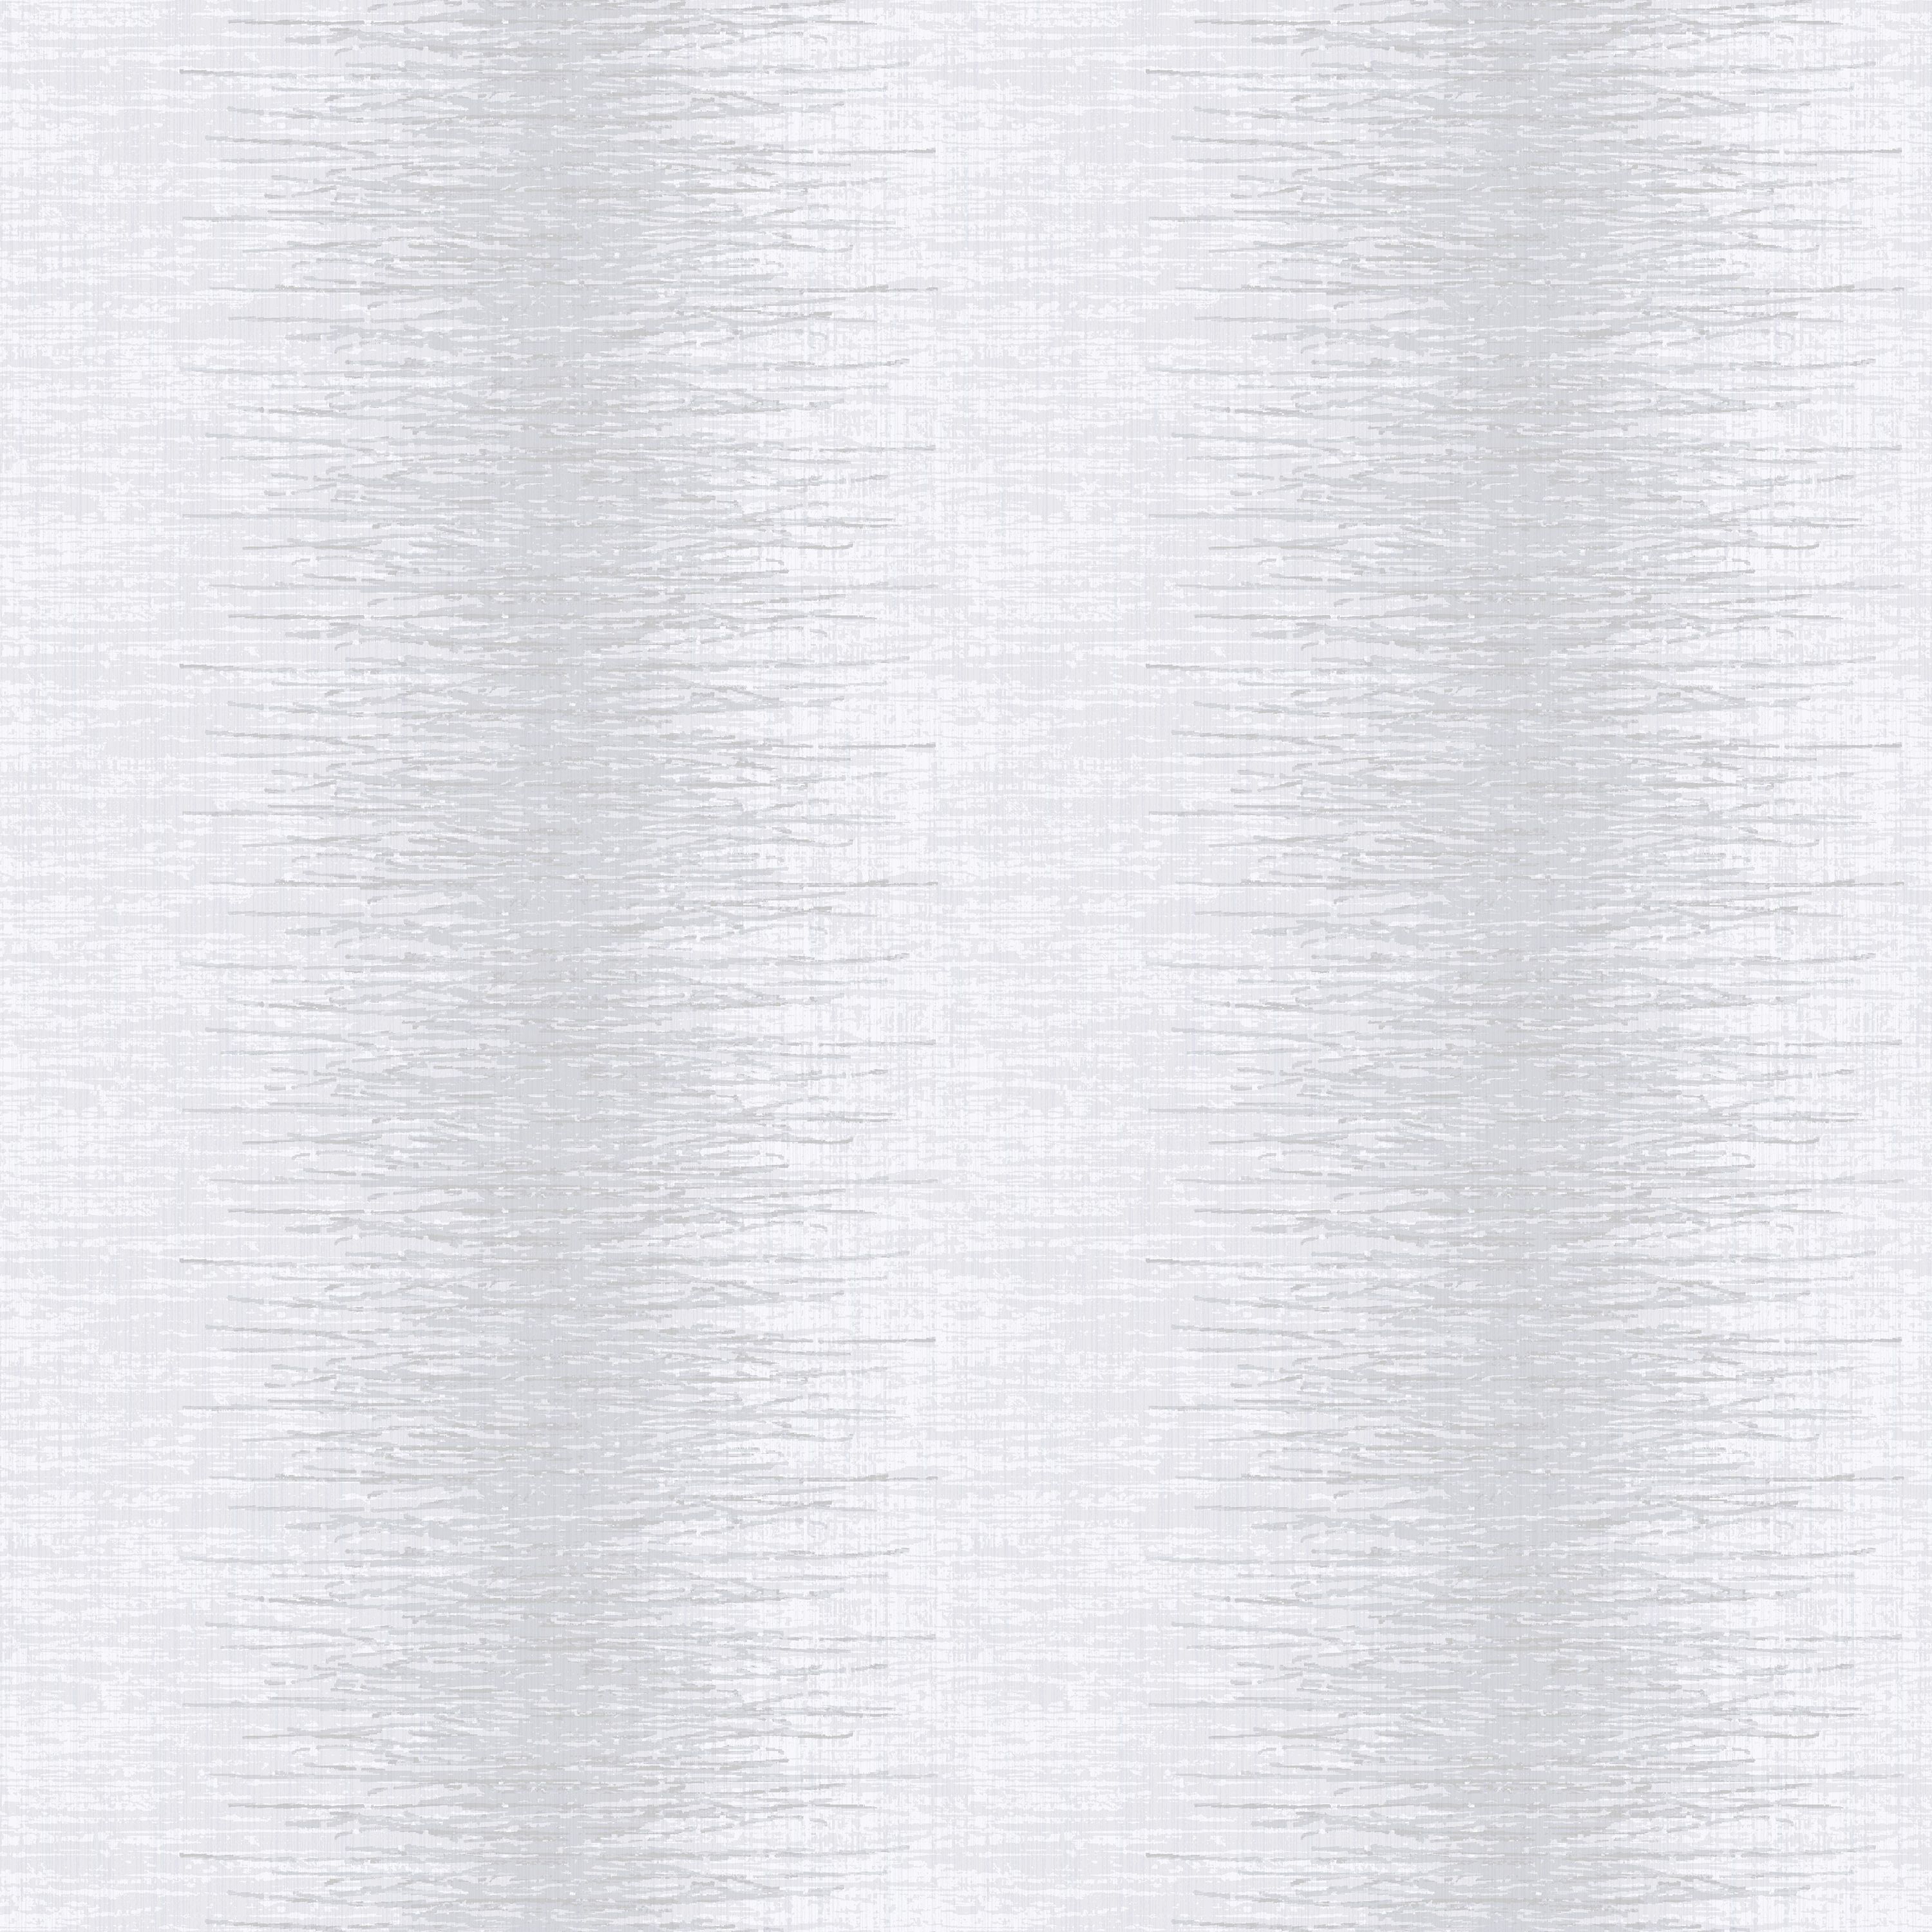 Julien MacDonald Illusion Striped Silver glitter effect Embossed Wallpaper